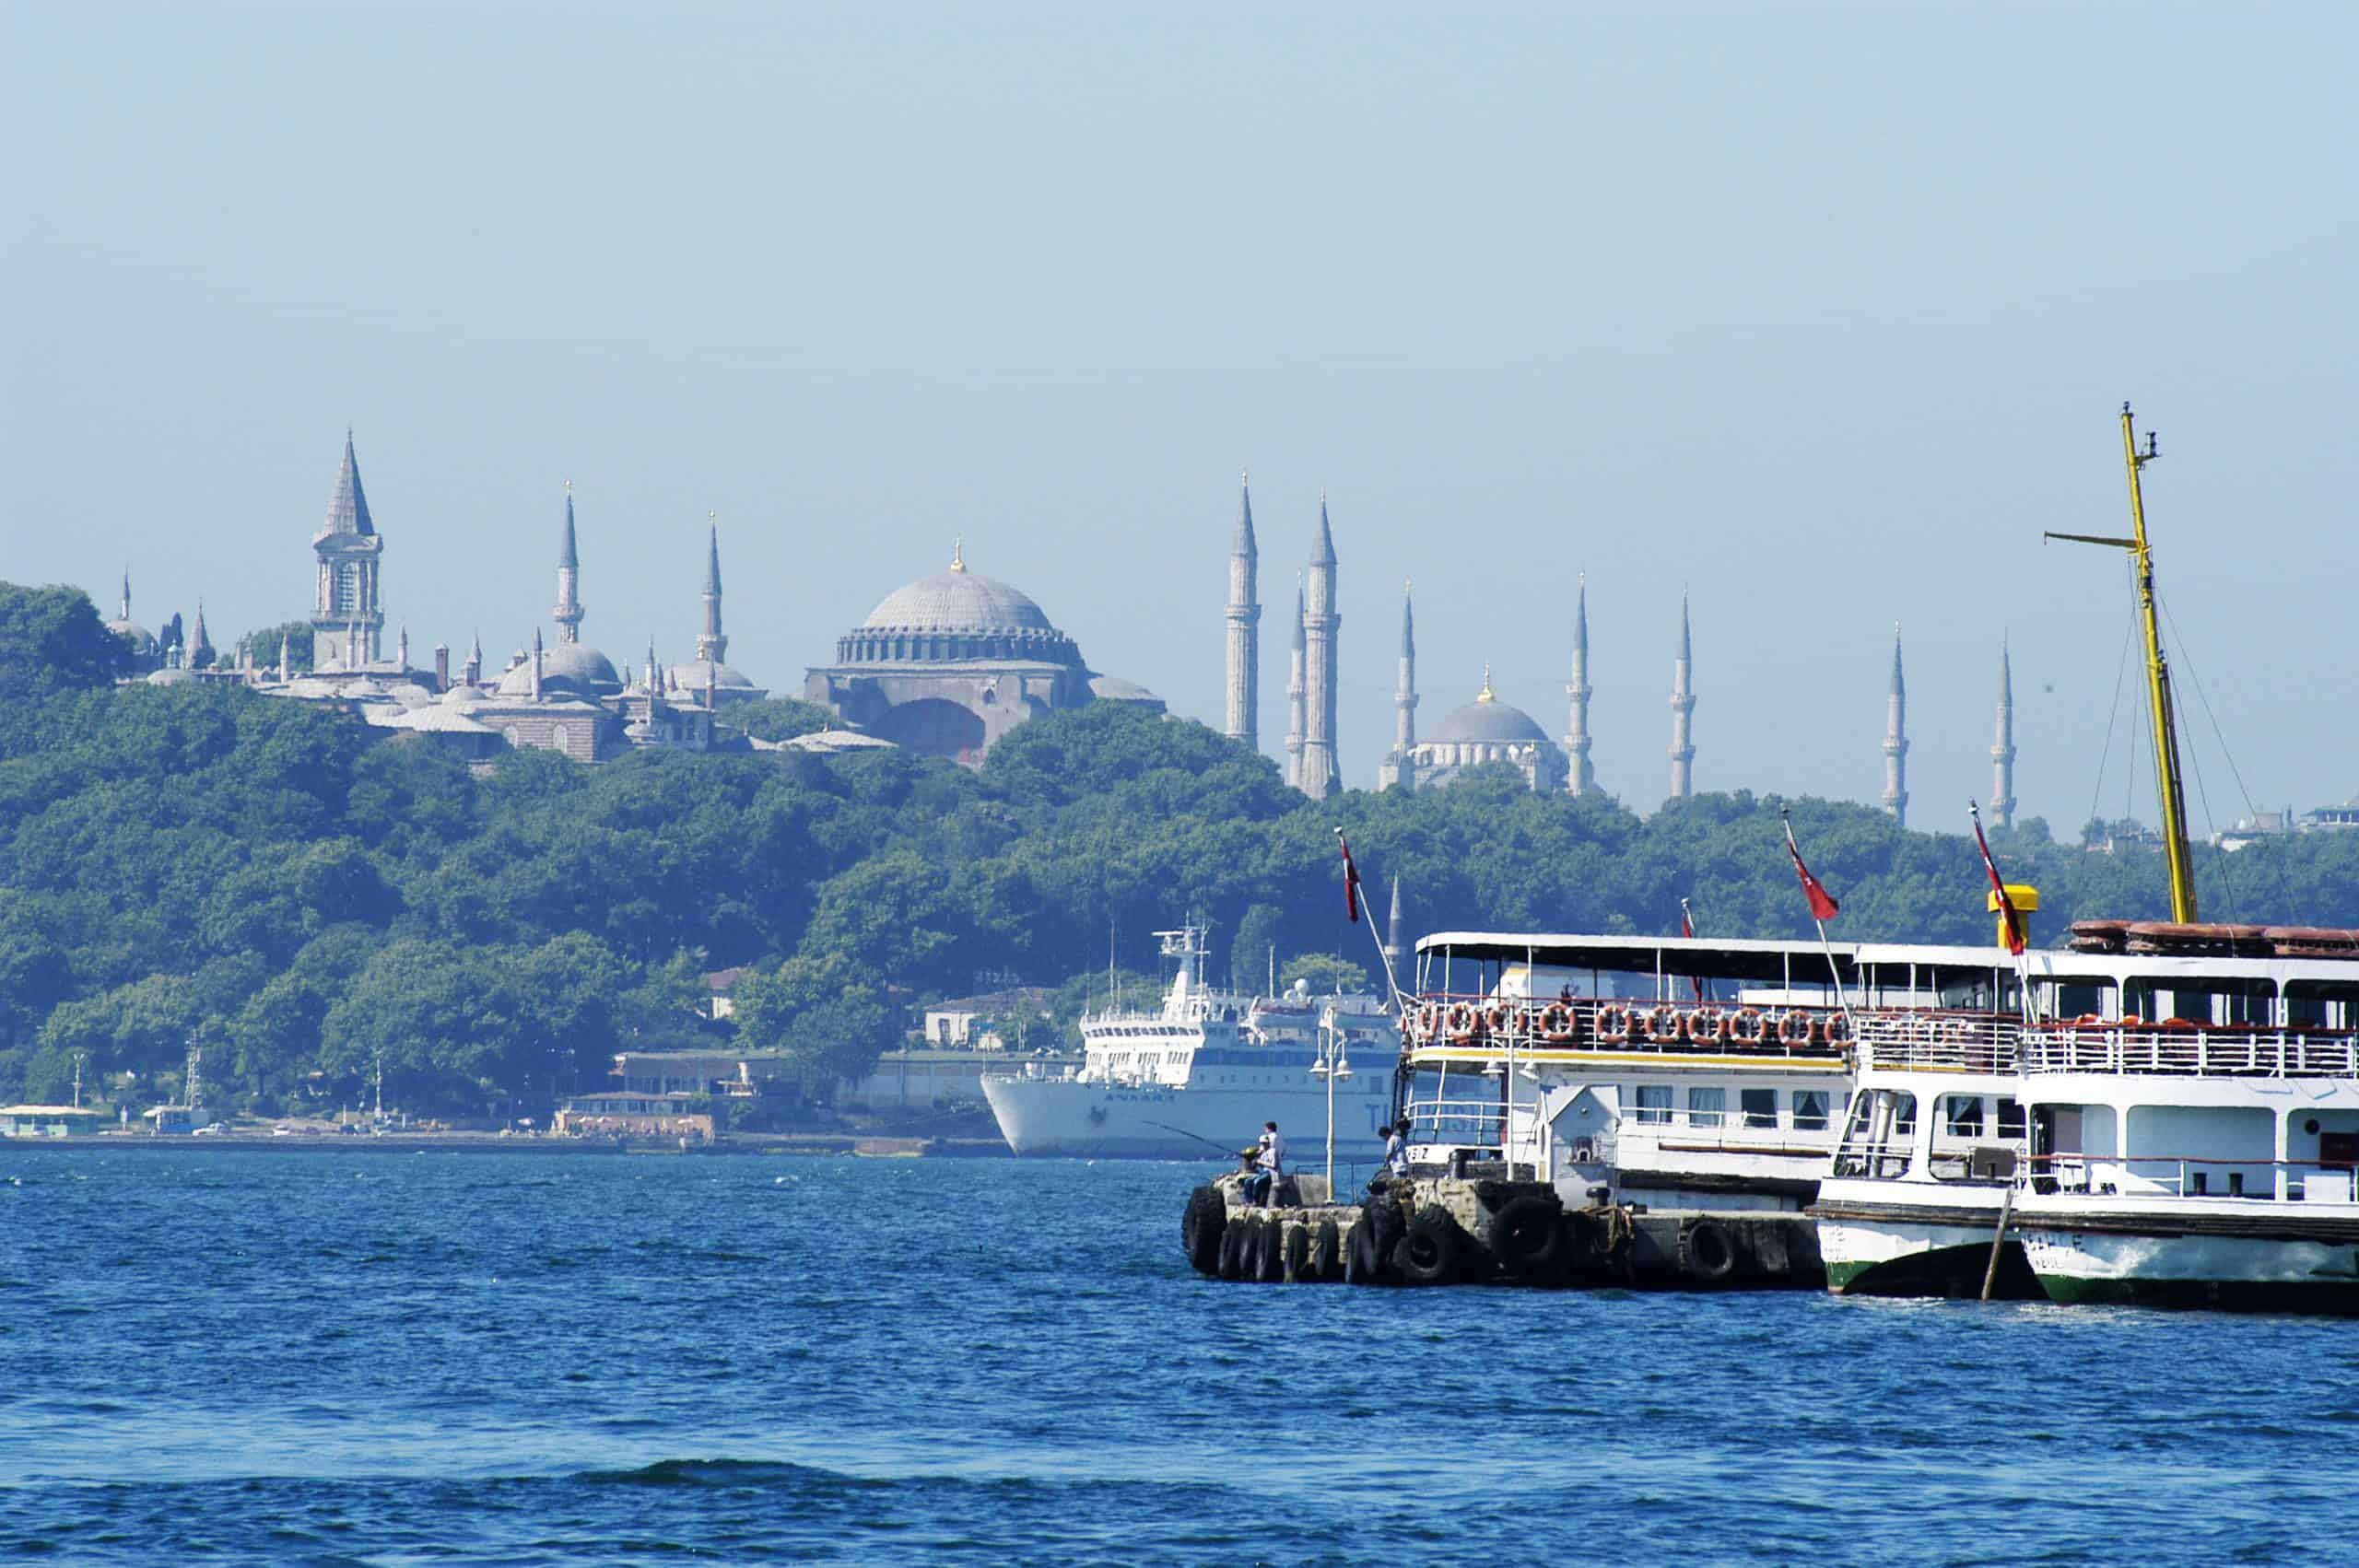 Стамбул находка. Стамбул Босфор. Турецкий пролив Босфор. Босфорский залив Стамбула. Турция пролив Босфор (Bosphorus).